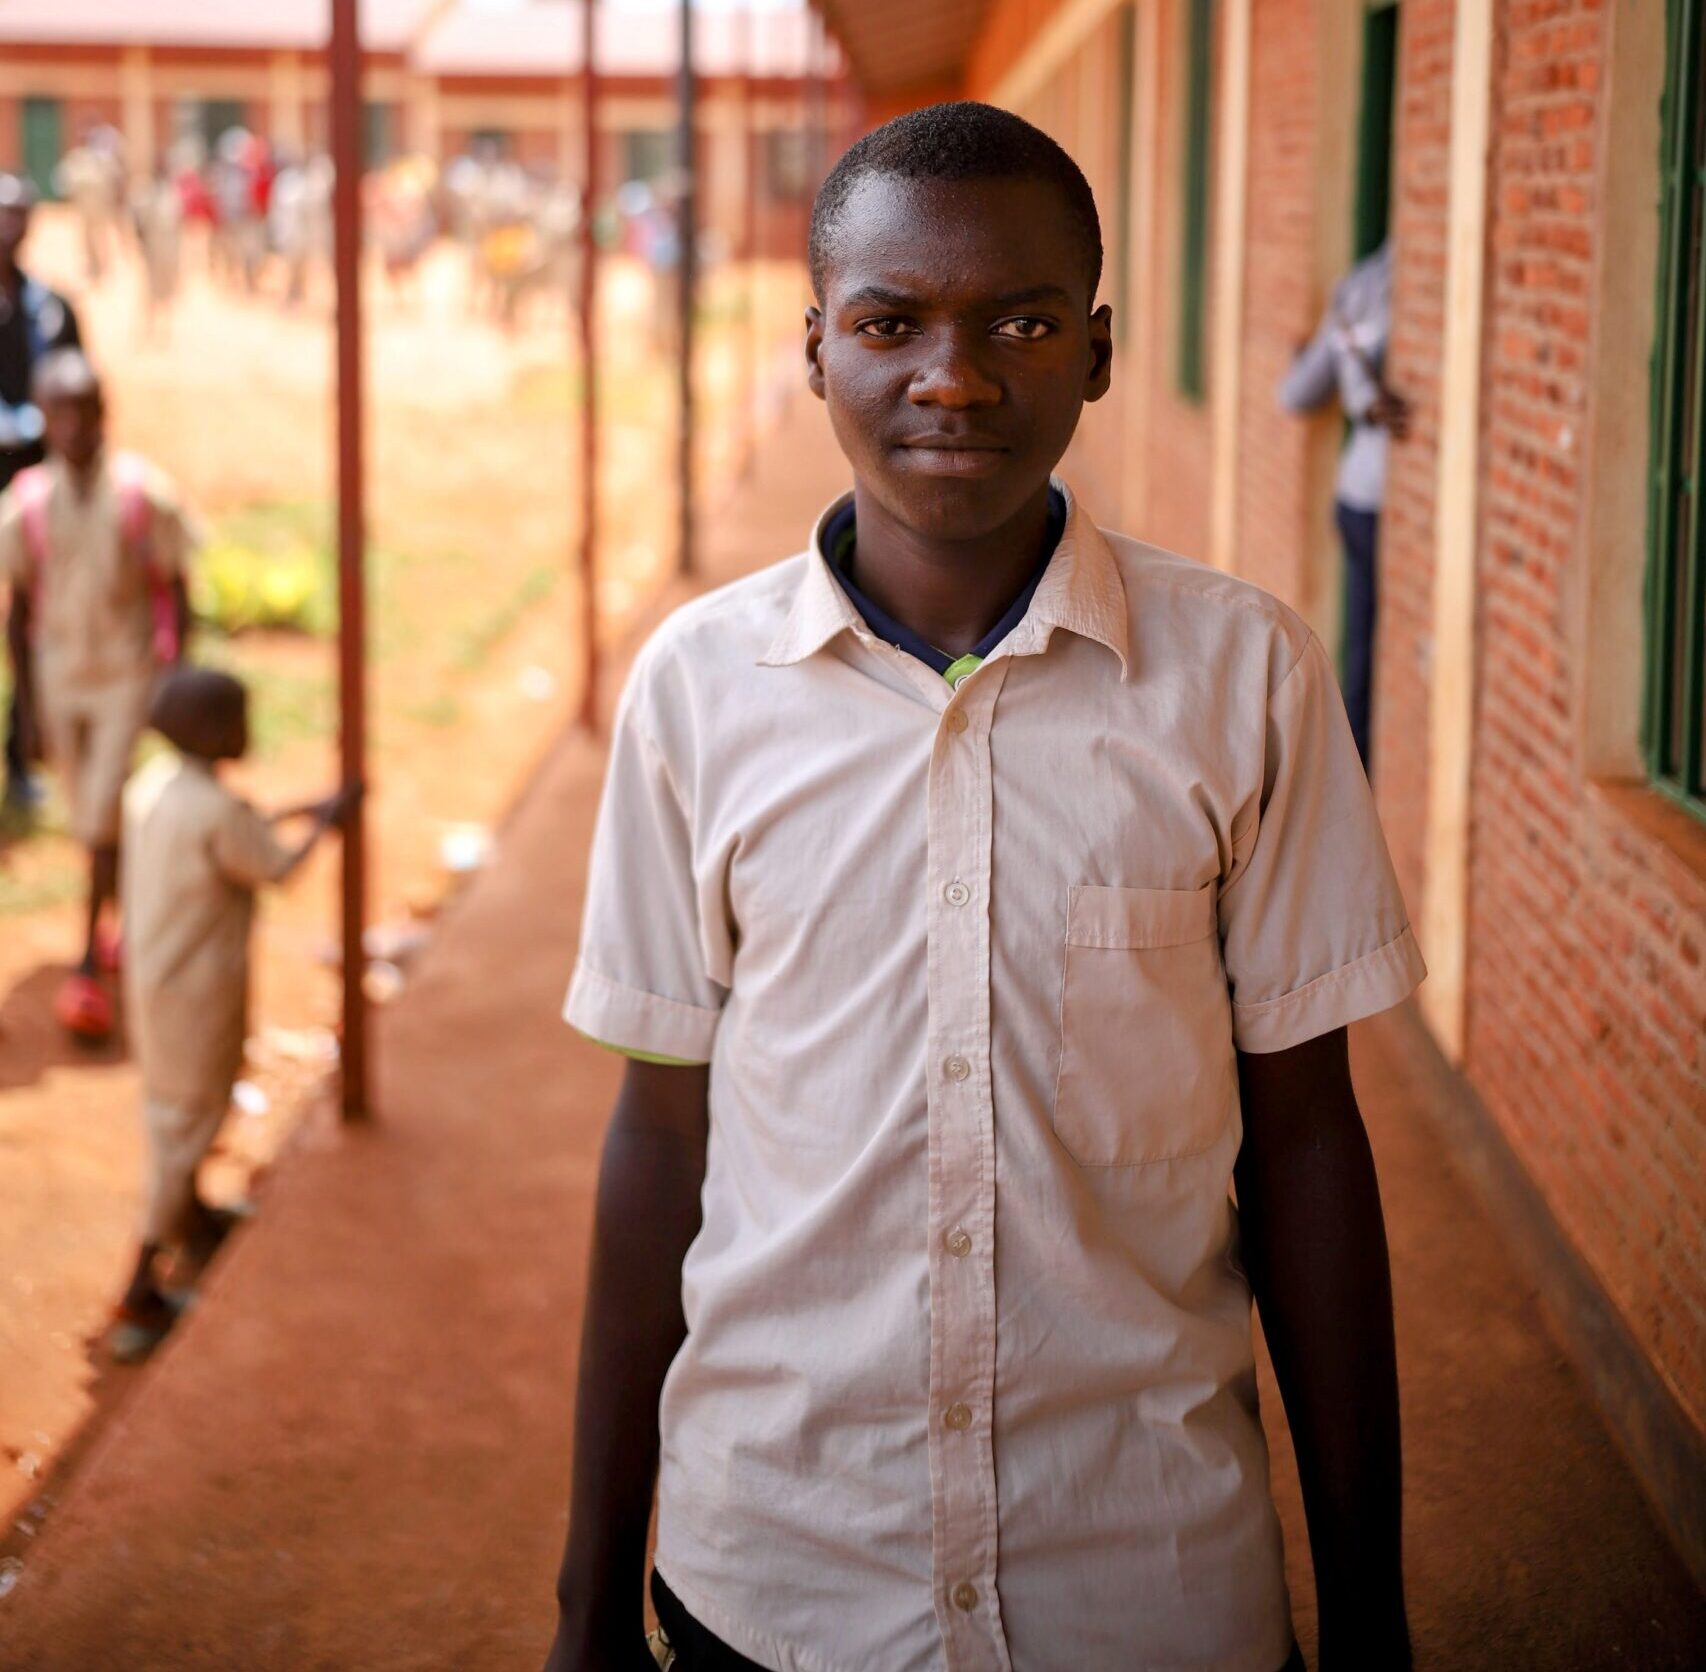 meet Ferdinand from Burundi